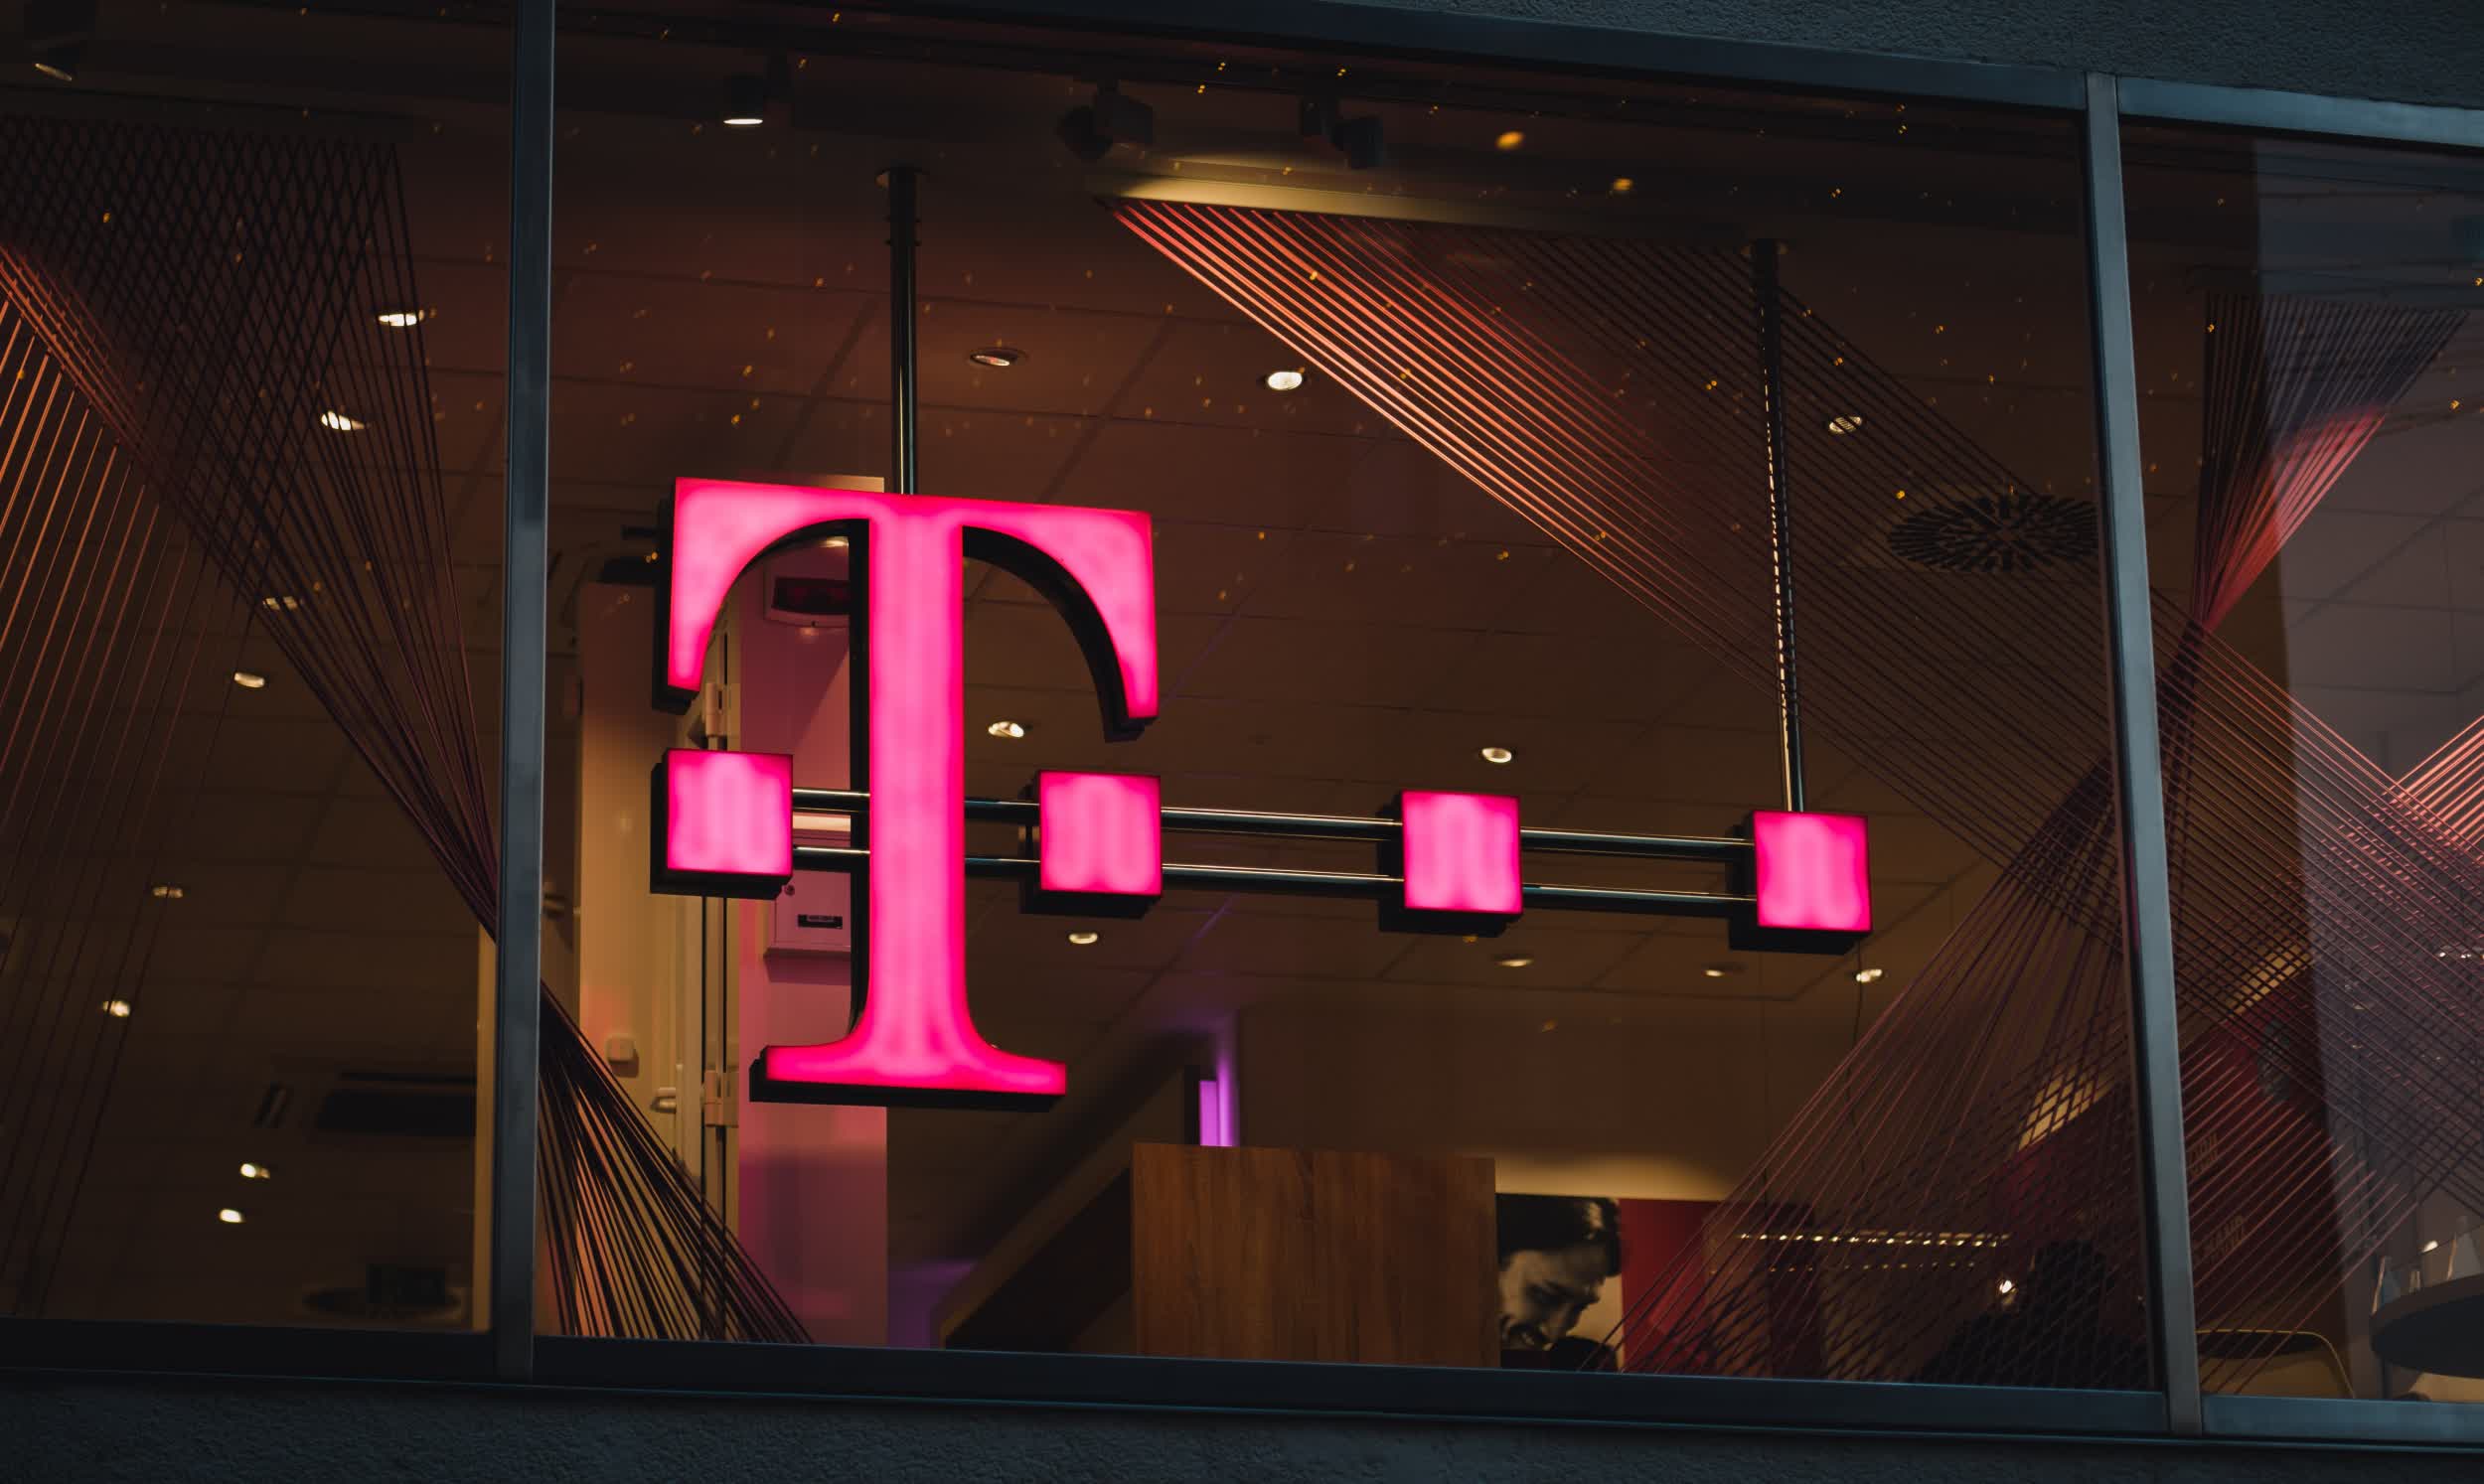 Latest T-Mobile data breach impacts 37 million customers